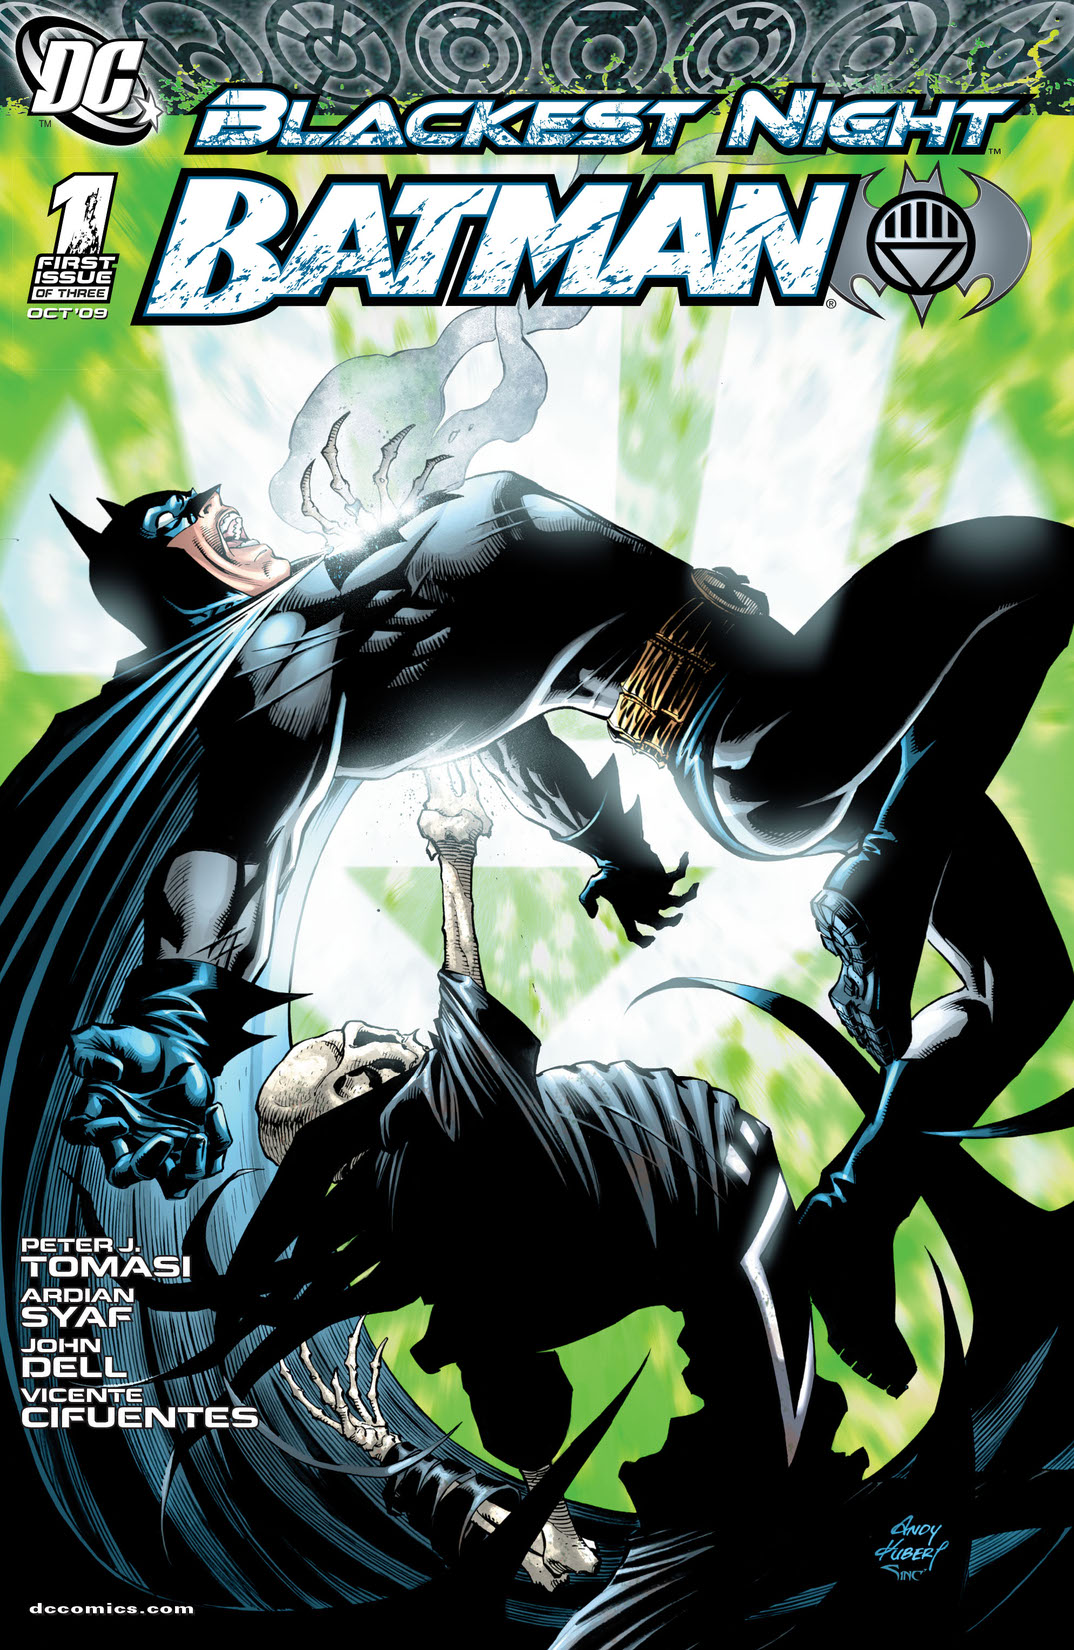 Blackest Night: Batman #1 preview images